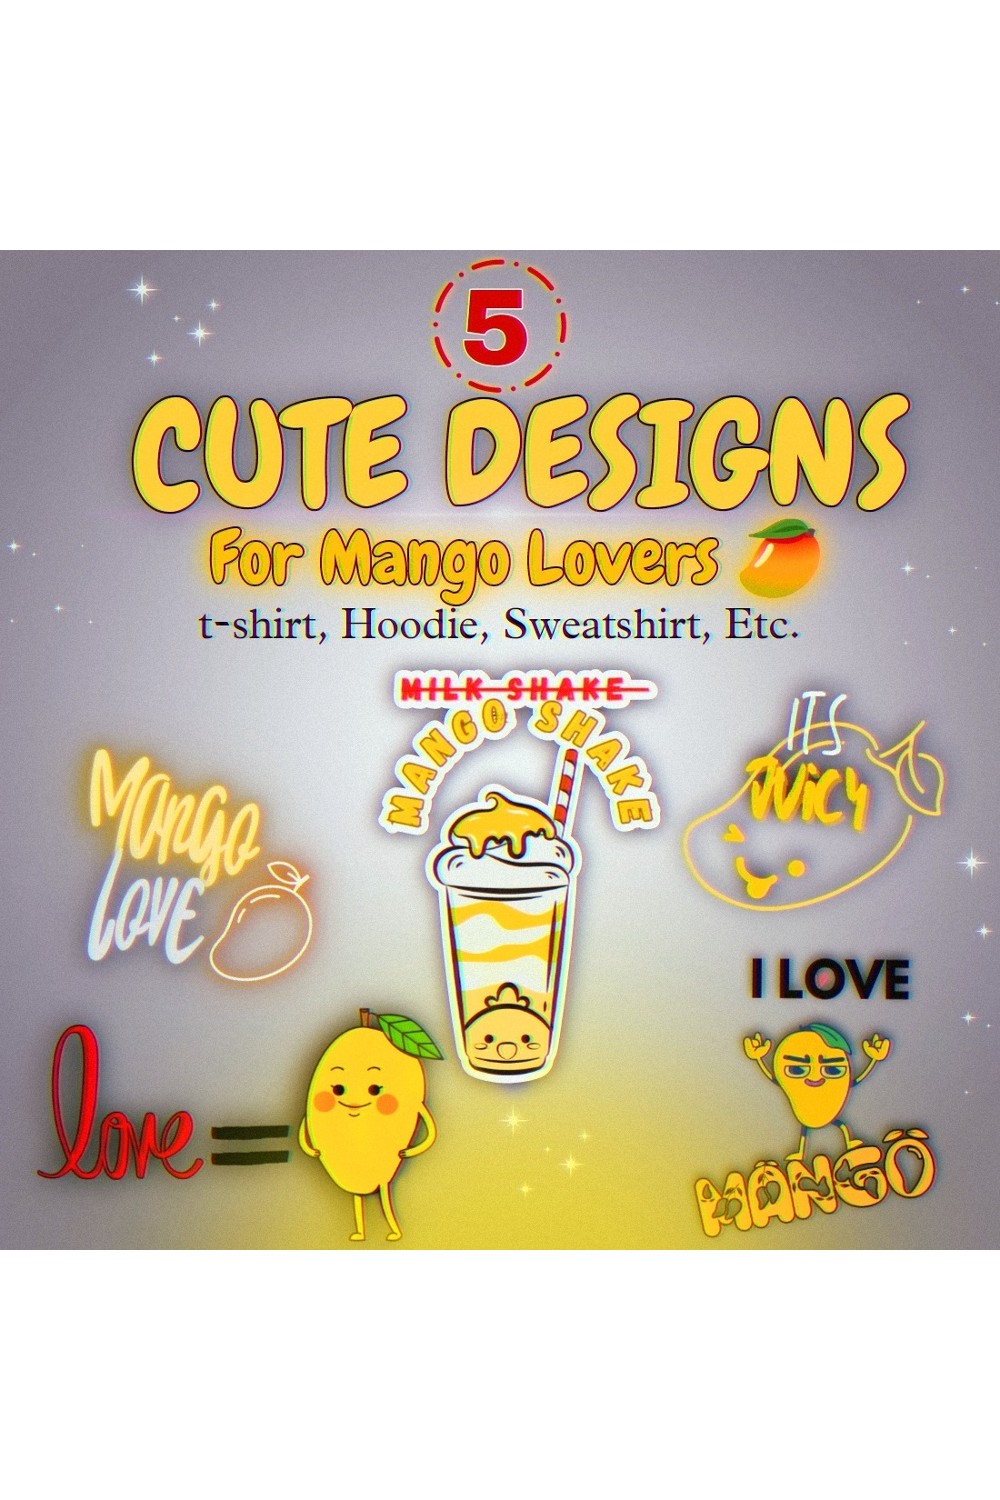 5 cute design for mango lovers, cute T-shirt design, mango t-shirt Design, cute designs pinterest preview image.